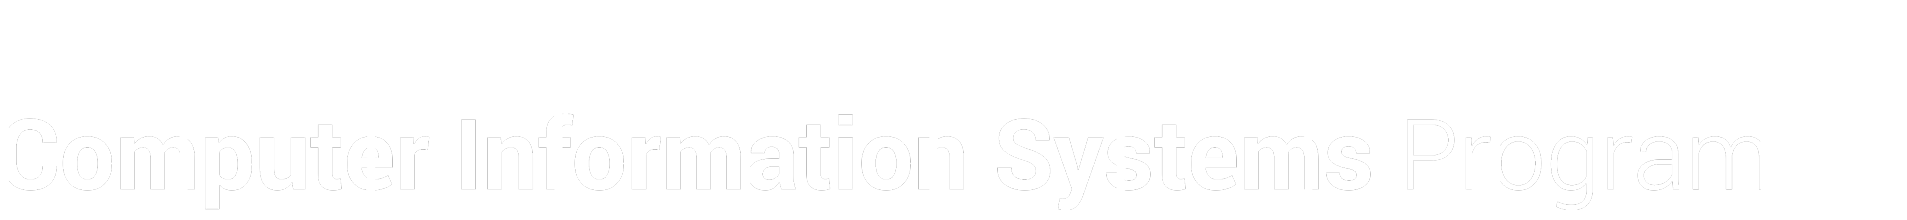 Computer Information Systems Program